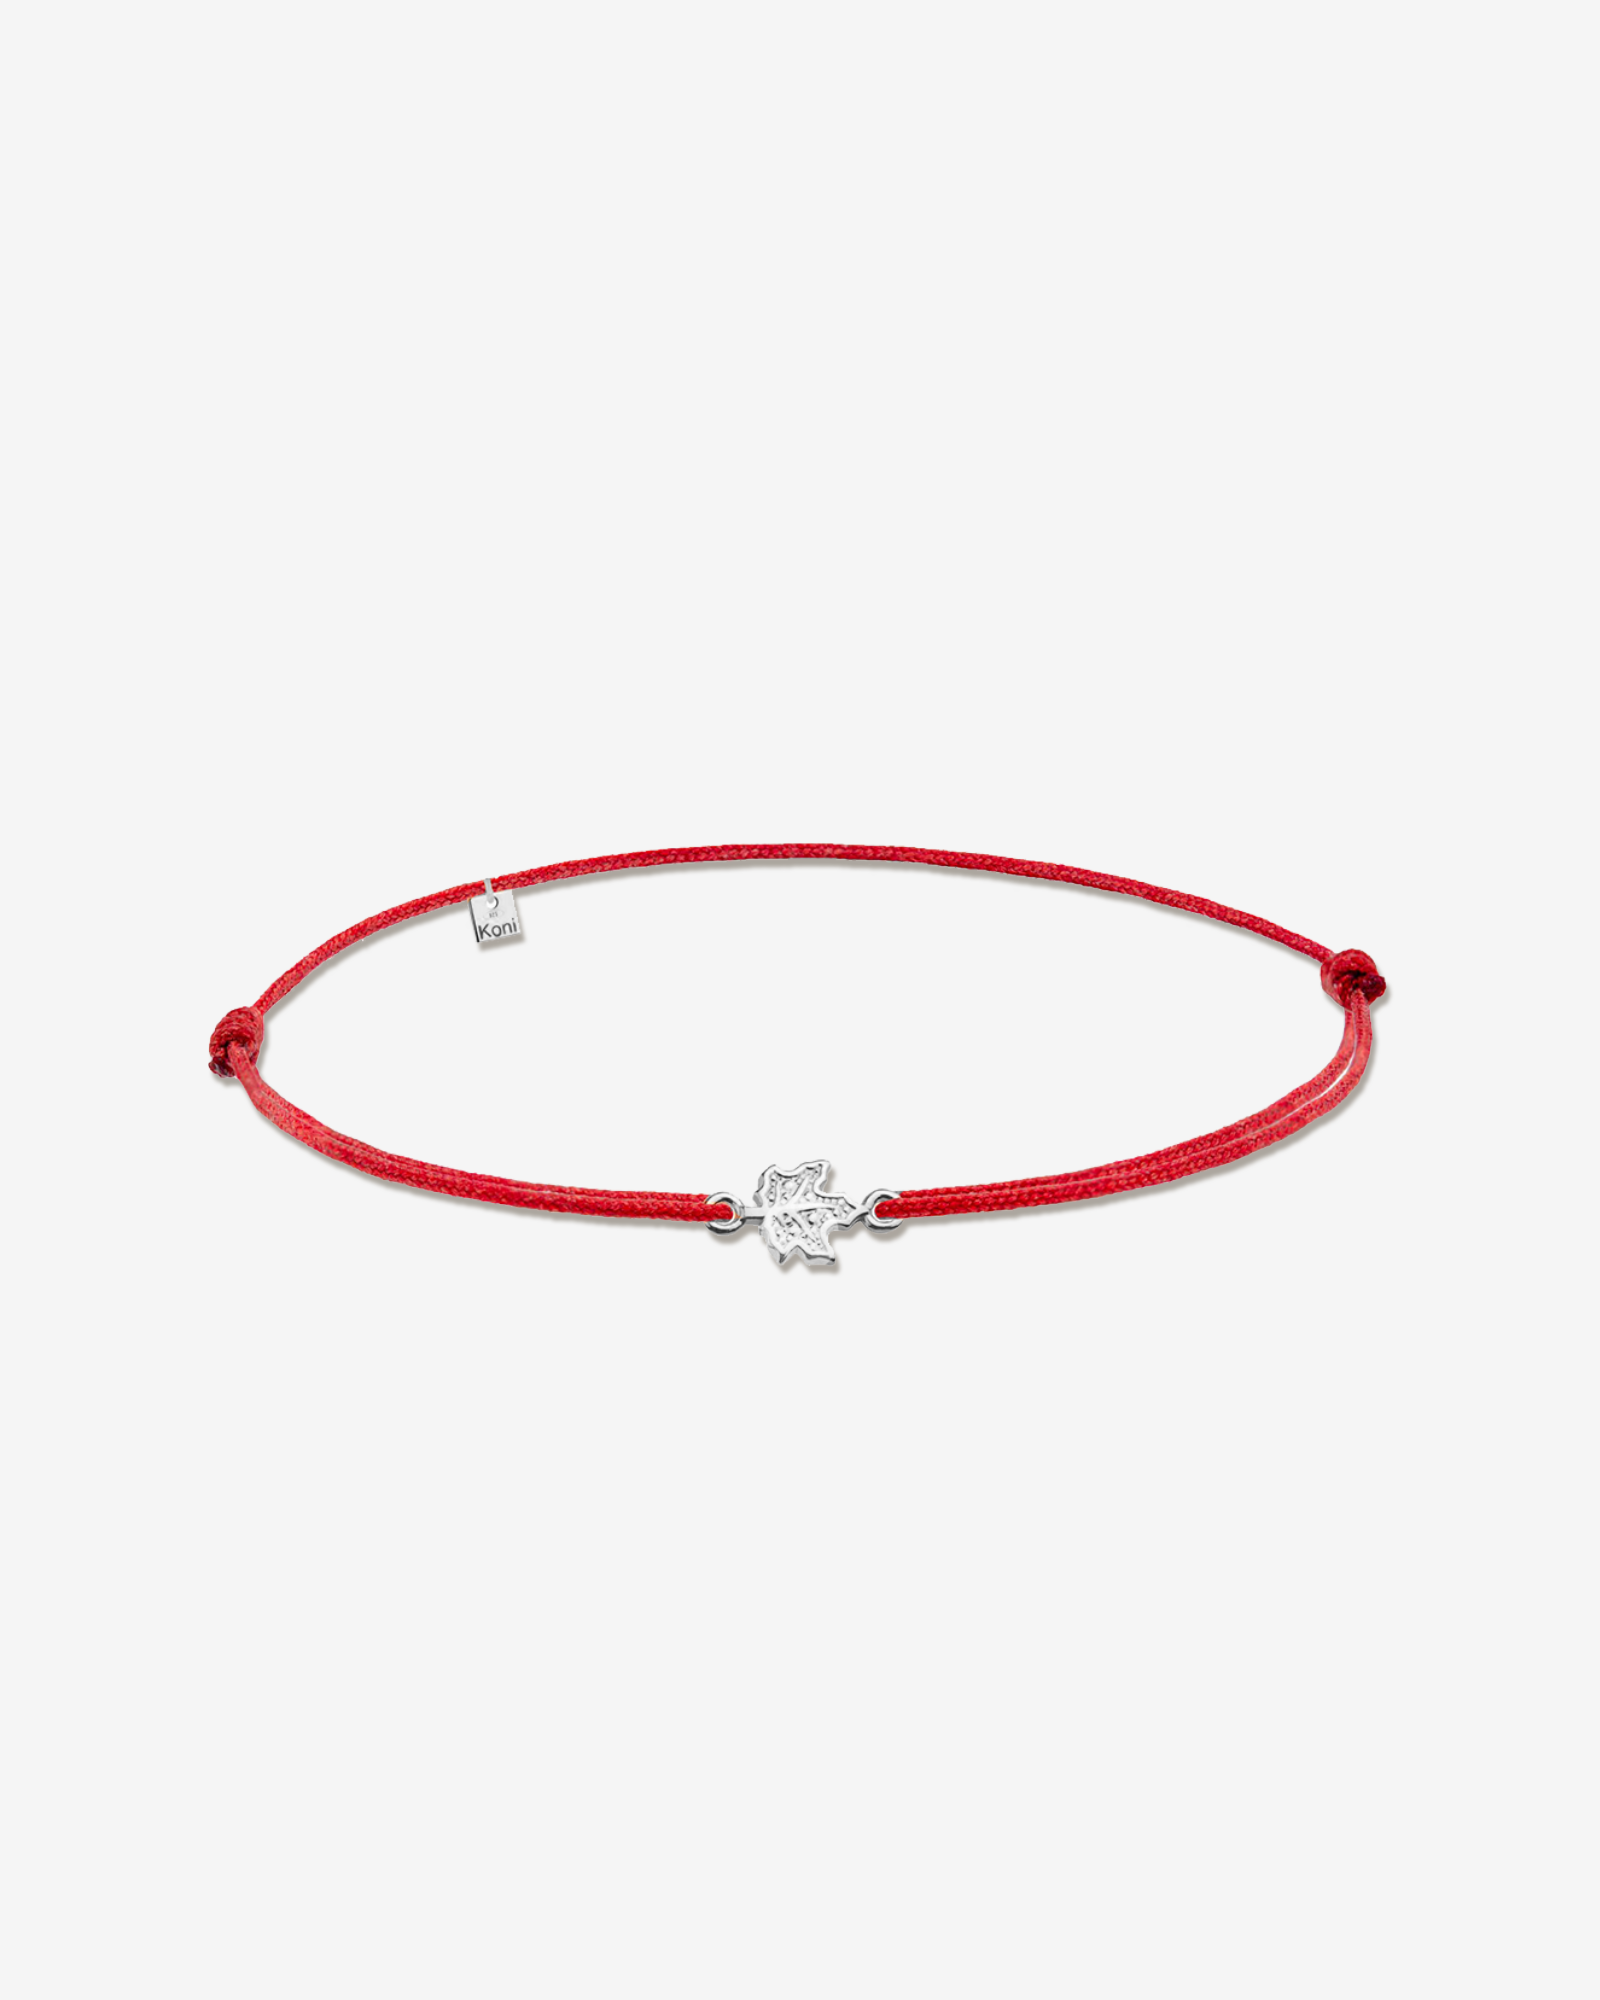 Abeille - silver bracelet